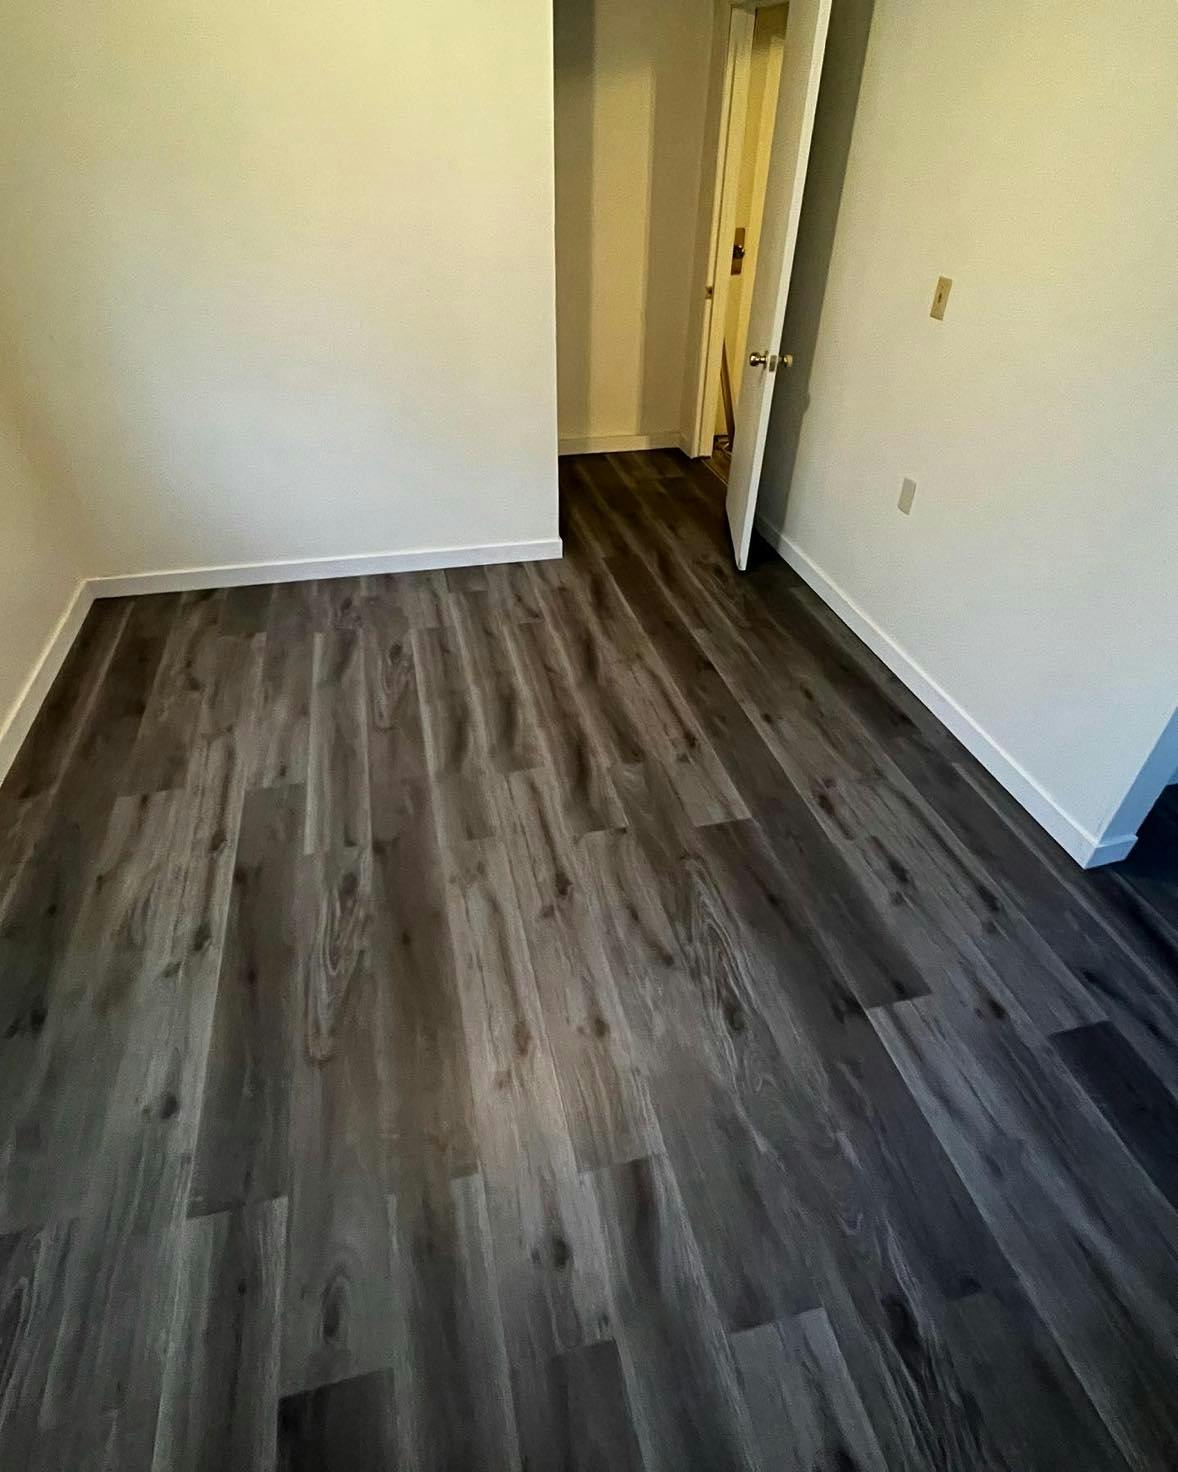 New flooring installed in bedroom